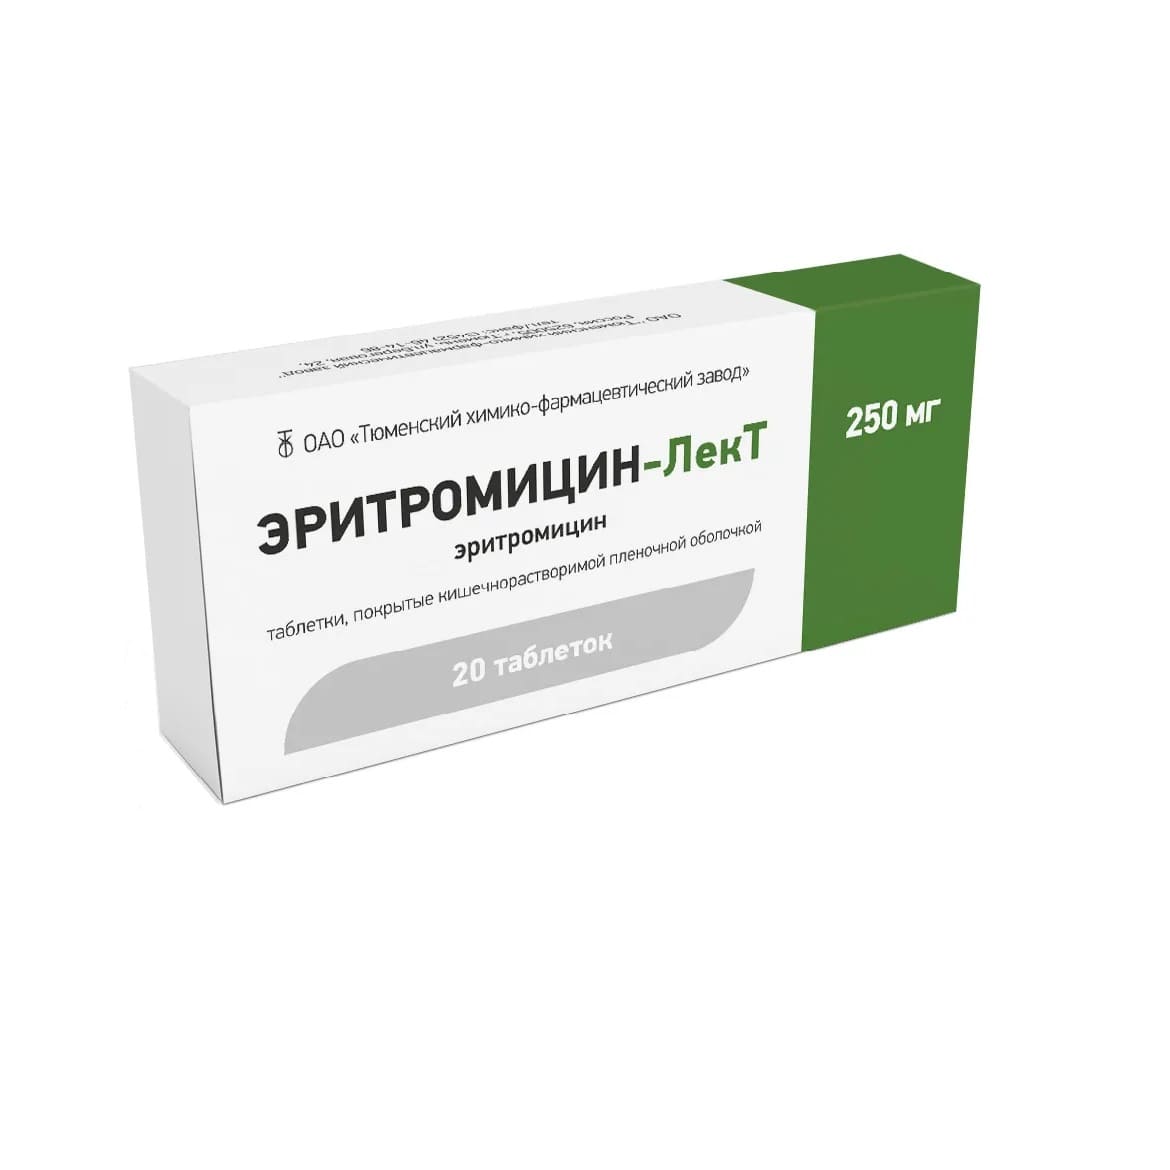 Erythromycin 250 mg 20 tablets